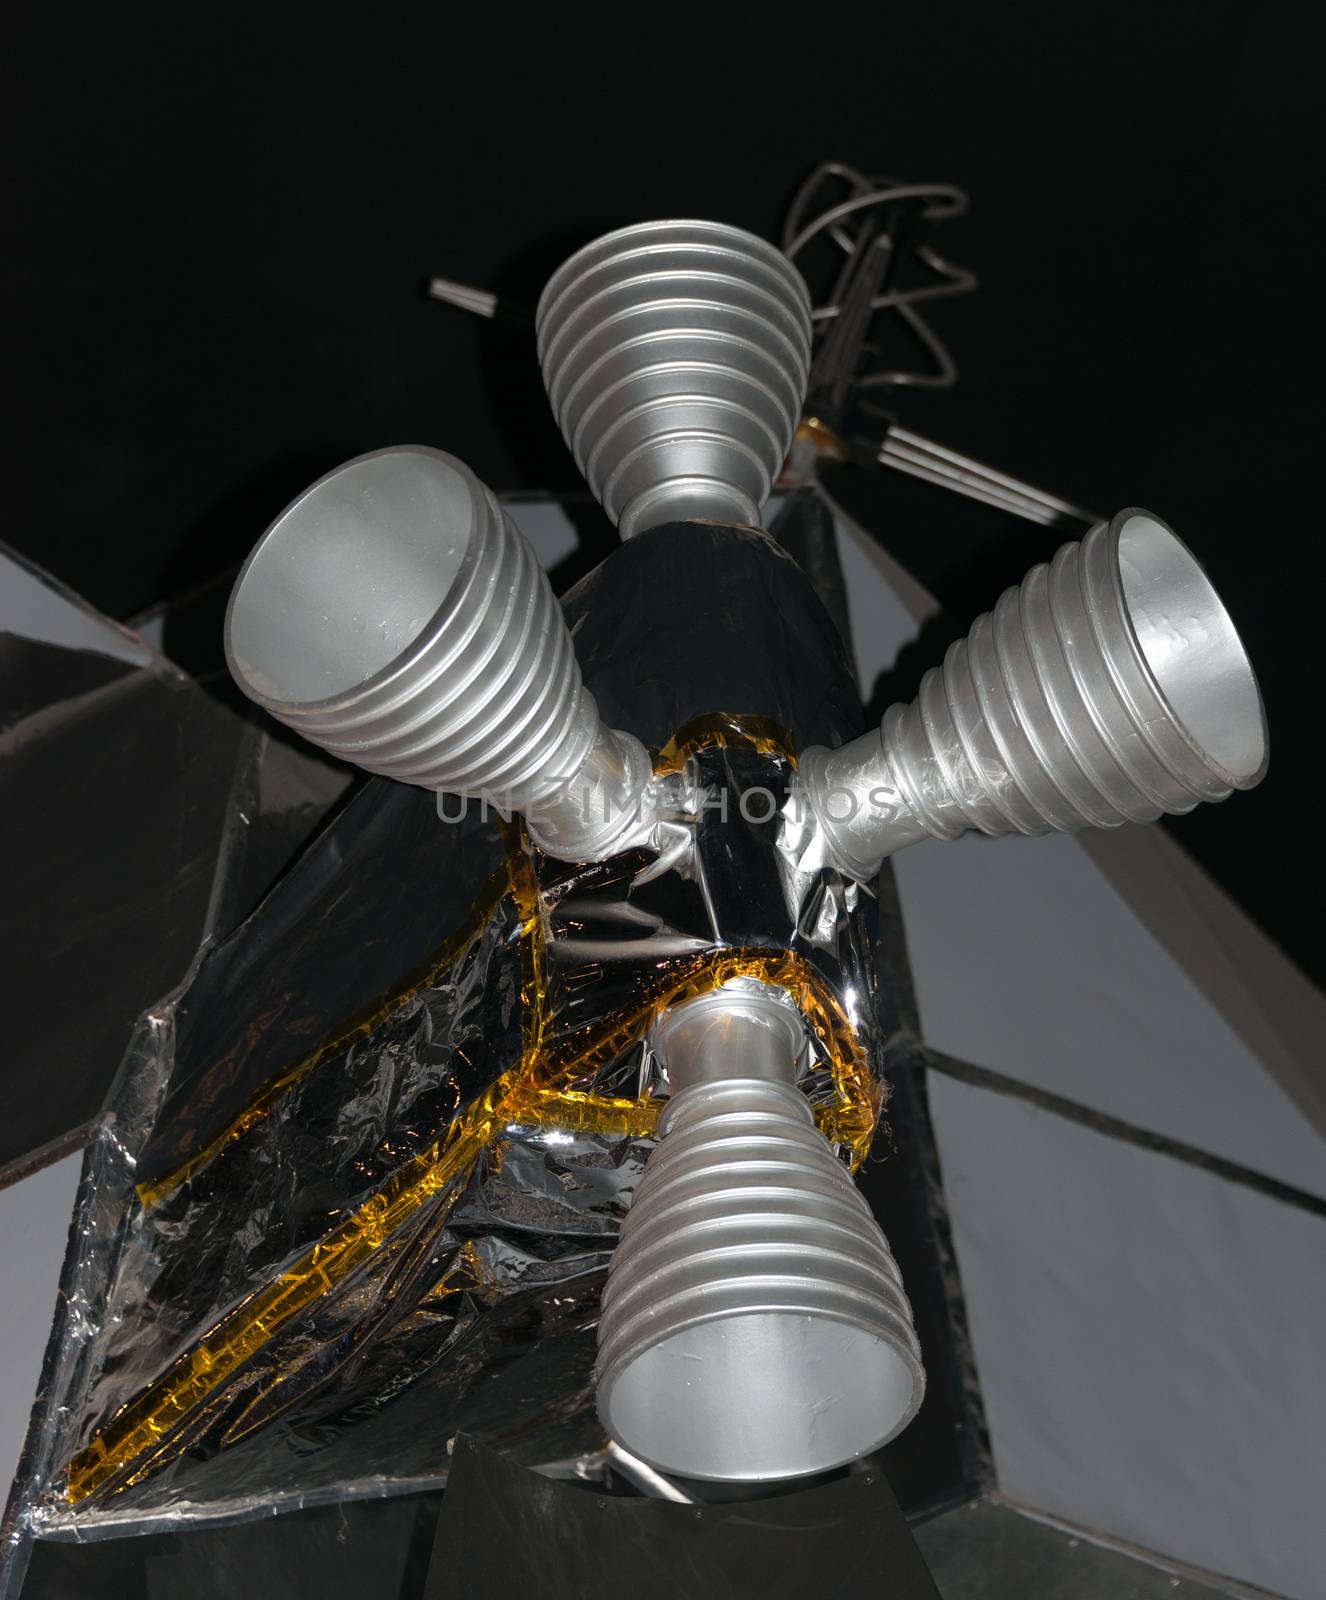 Retro Rockets on Lunar Module by TimAwe